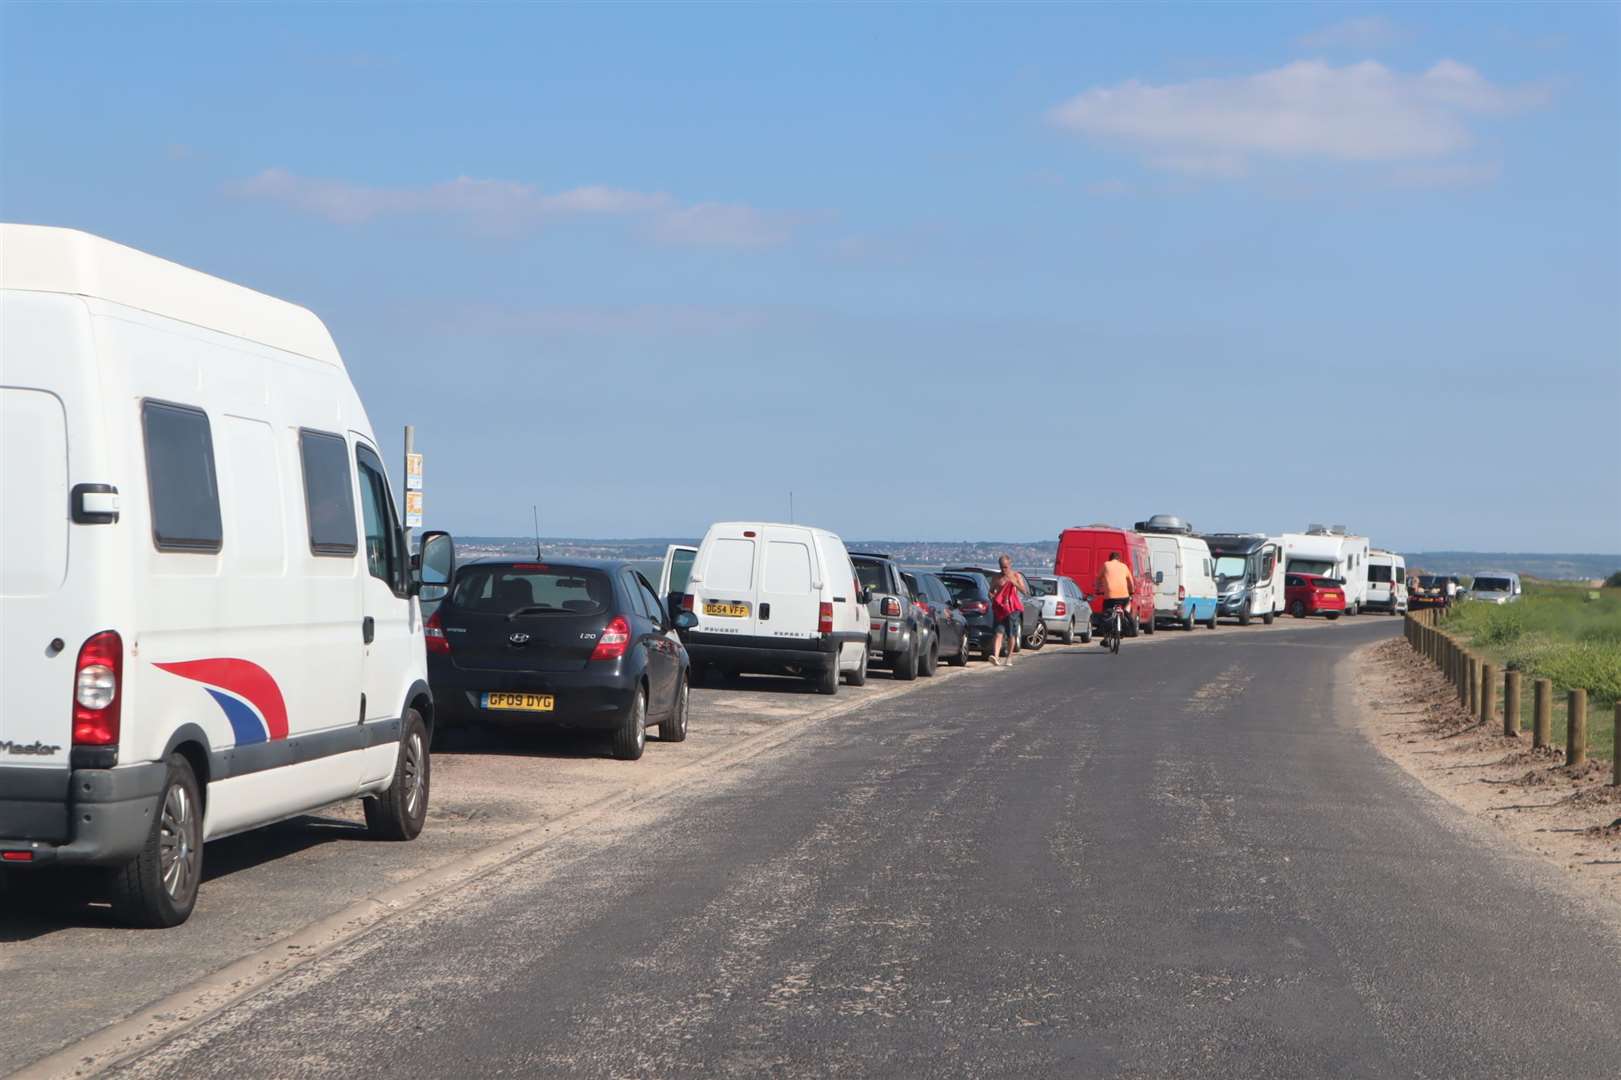 Motorhomes and campervans parked along the seawall at Shellness, Leysdown, Sheppey